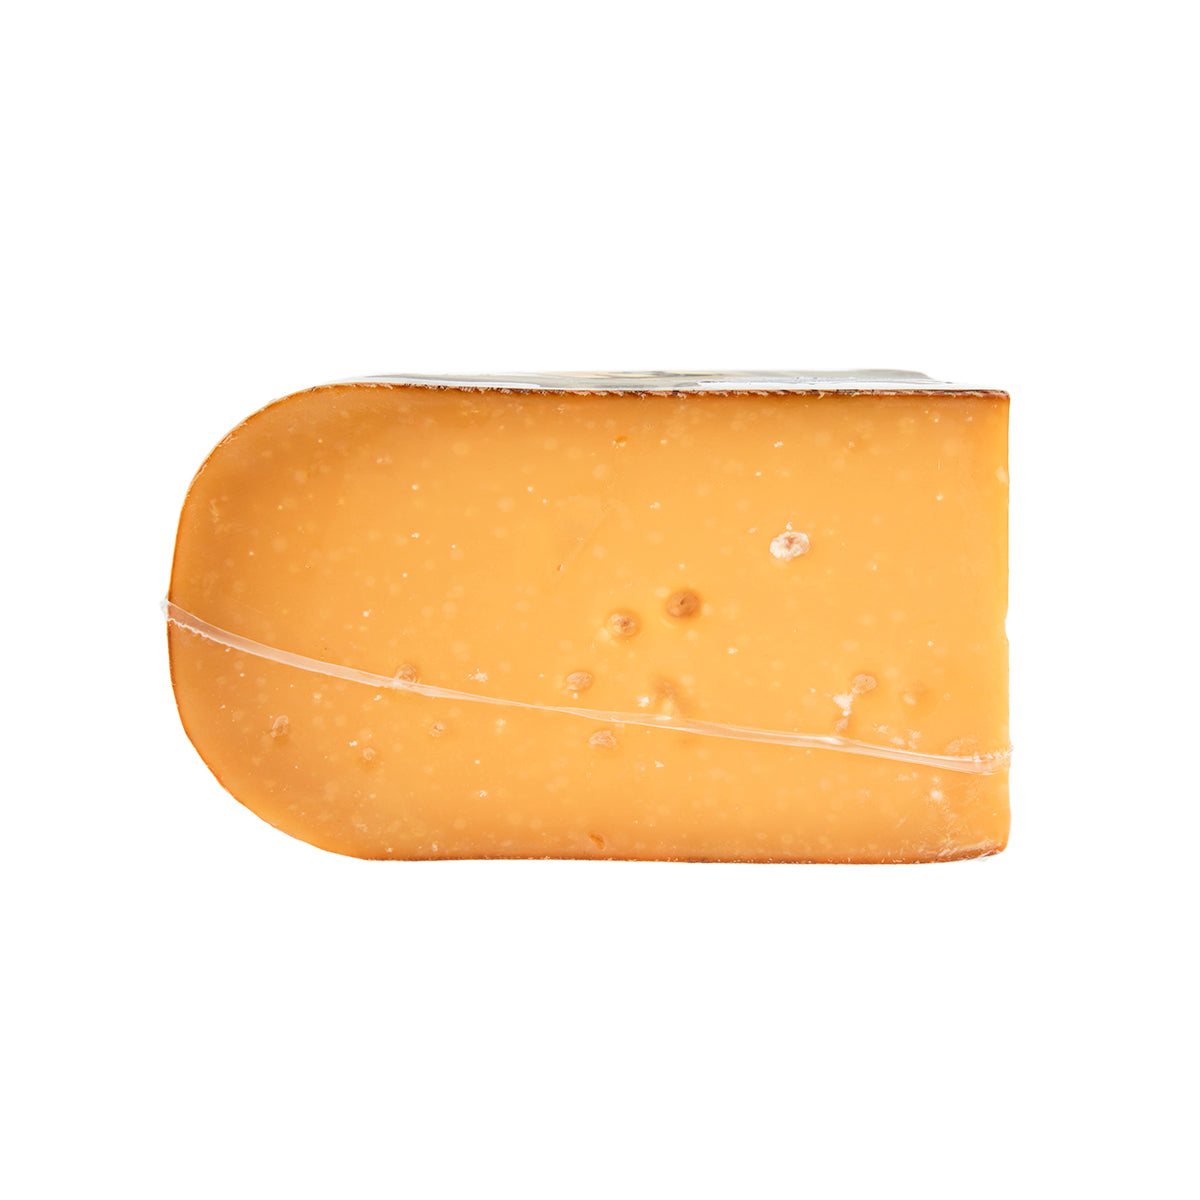 Beemster-Premium Dutch Cheese Extra-Aged Gouda Cheese Quarter Wheel